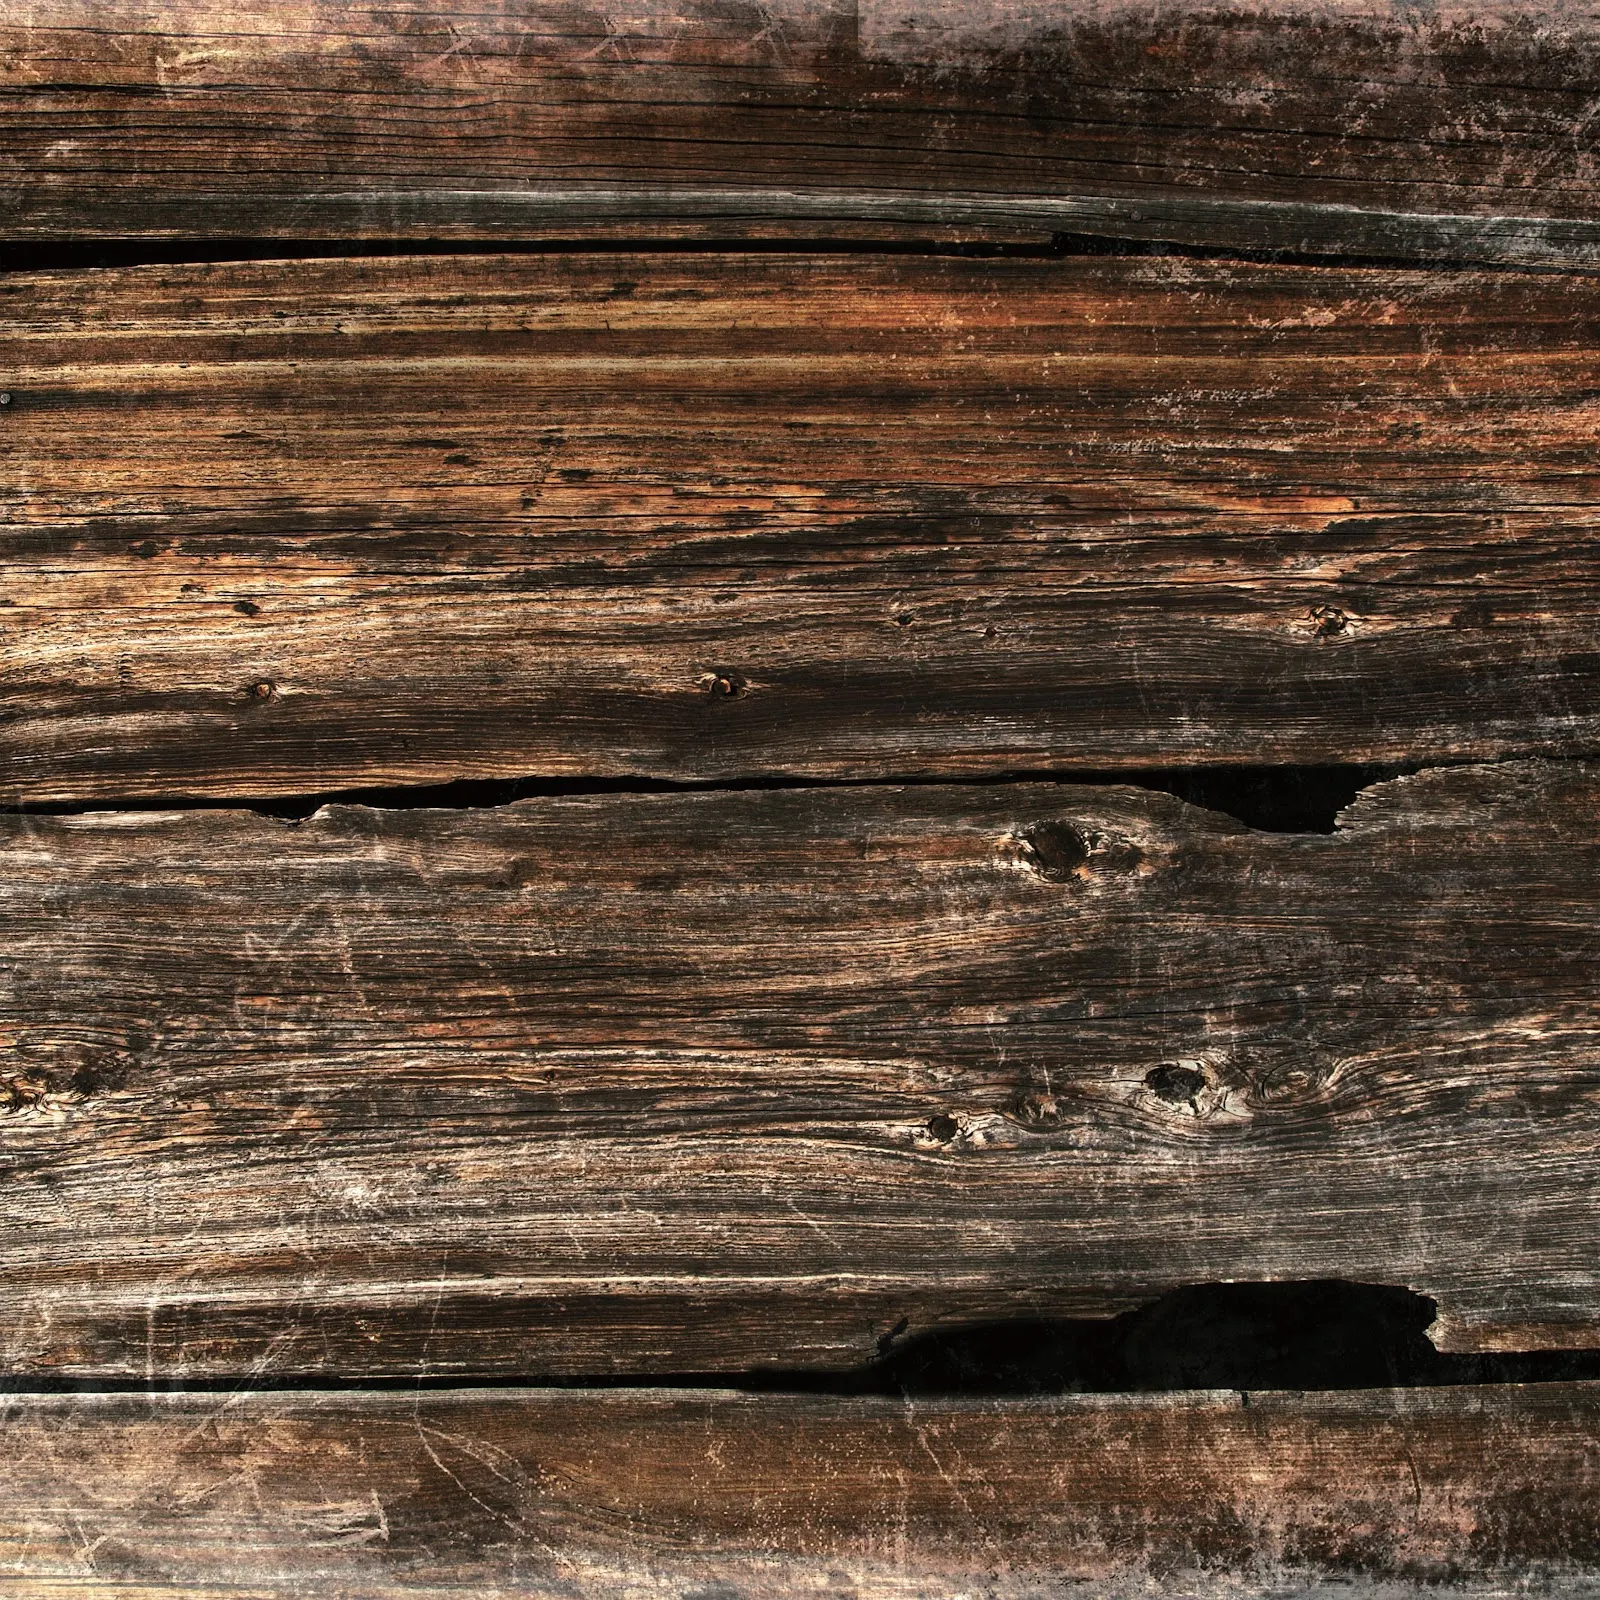 fondos con textura de madera para usar en menus de restaurante